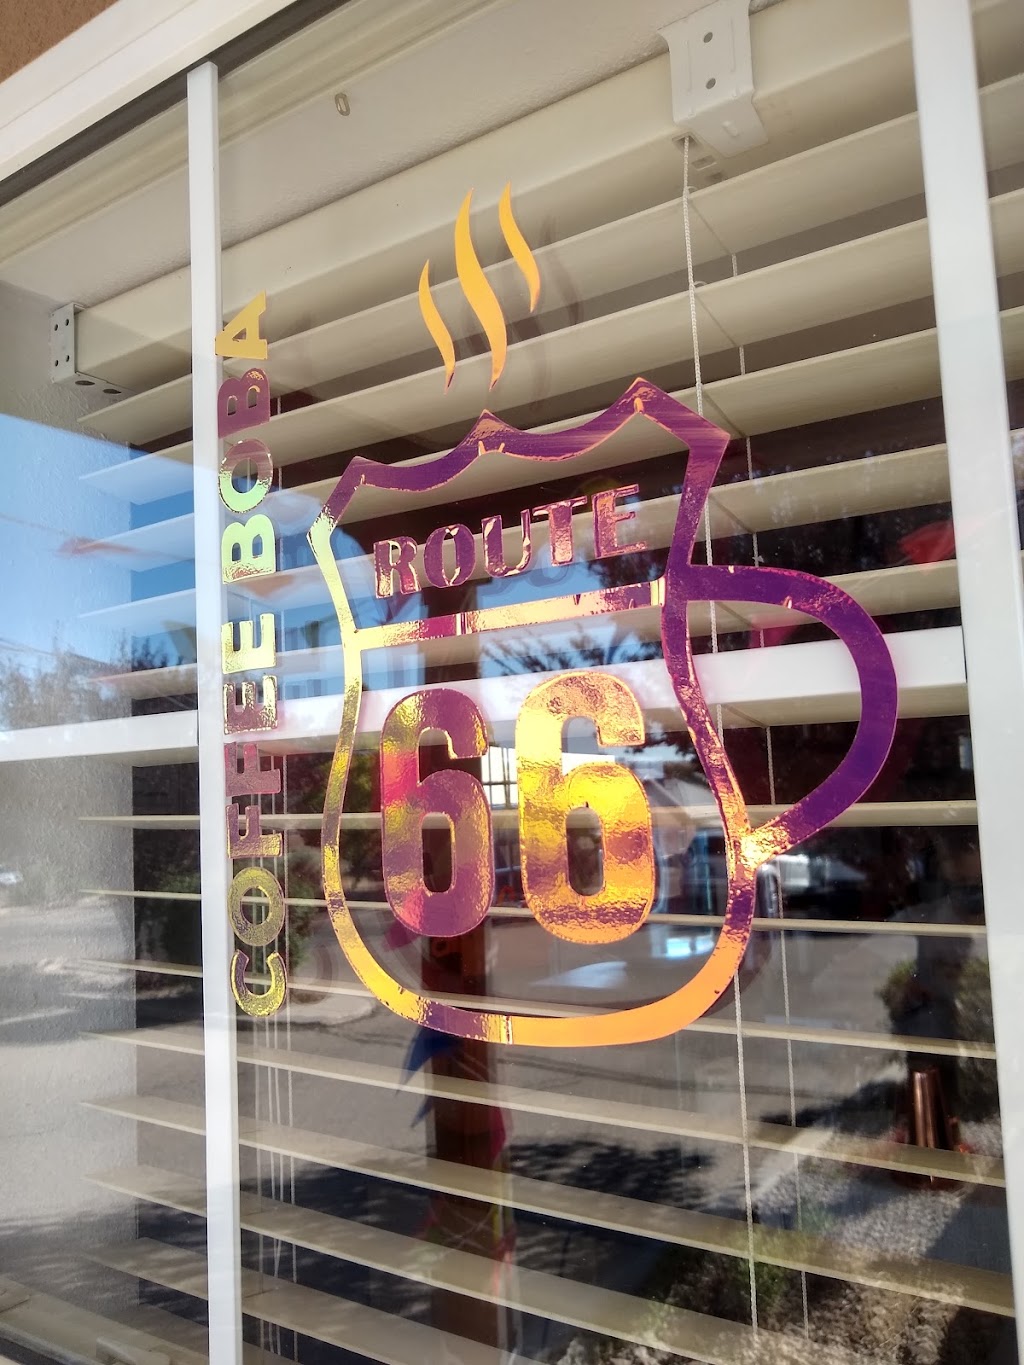 Route 66 Coffee & Boba | 3 George Ct, Edgewood, NM 87015, USA | Phone: (505) 926-9486